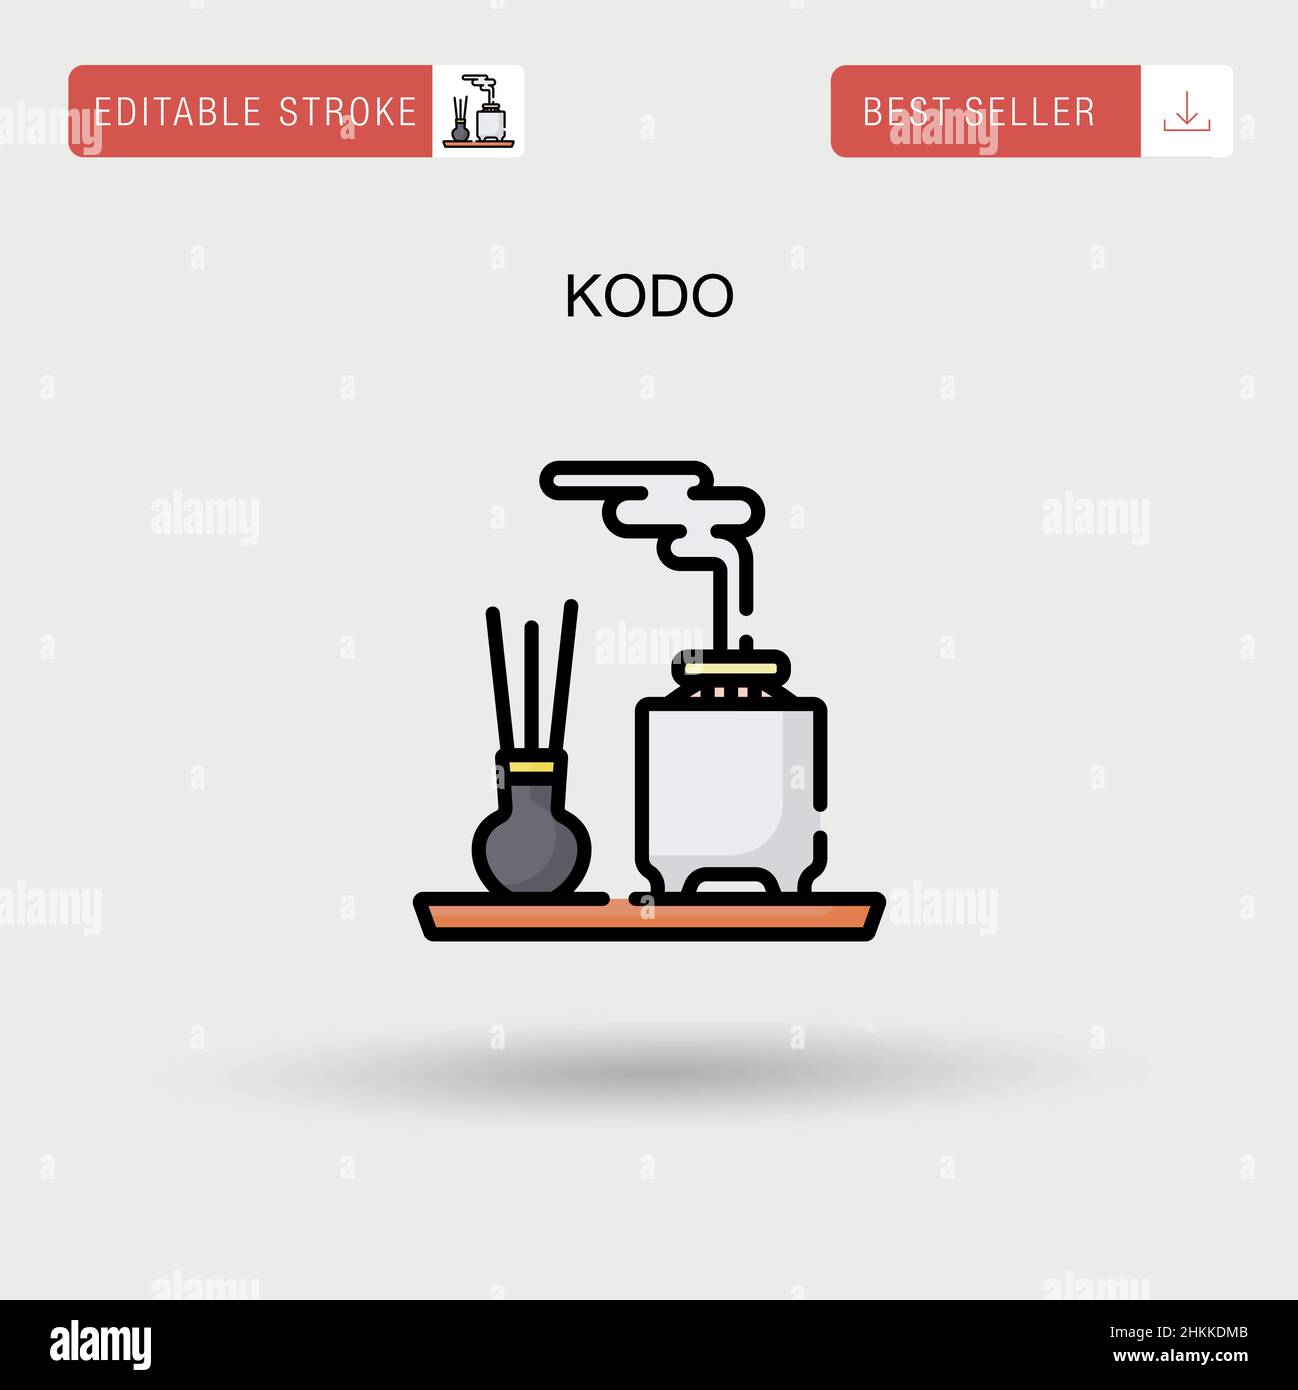 Einfaches Kodo-Vektorsymbol. Stock Vektor